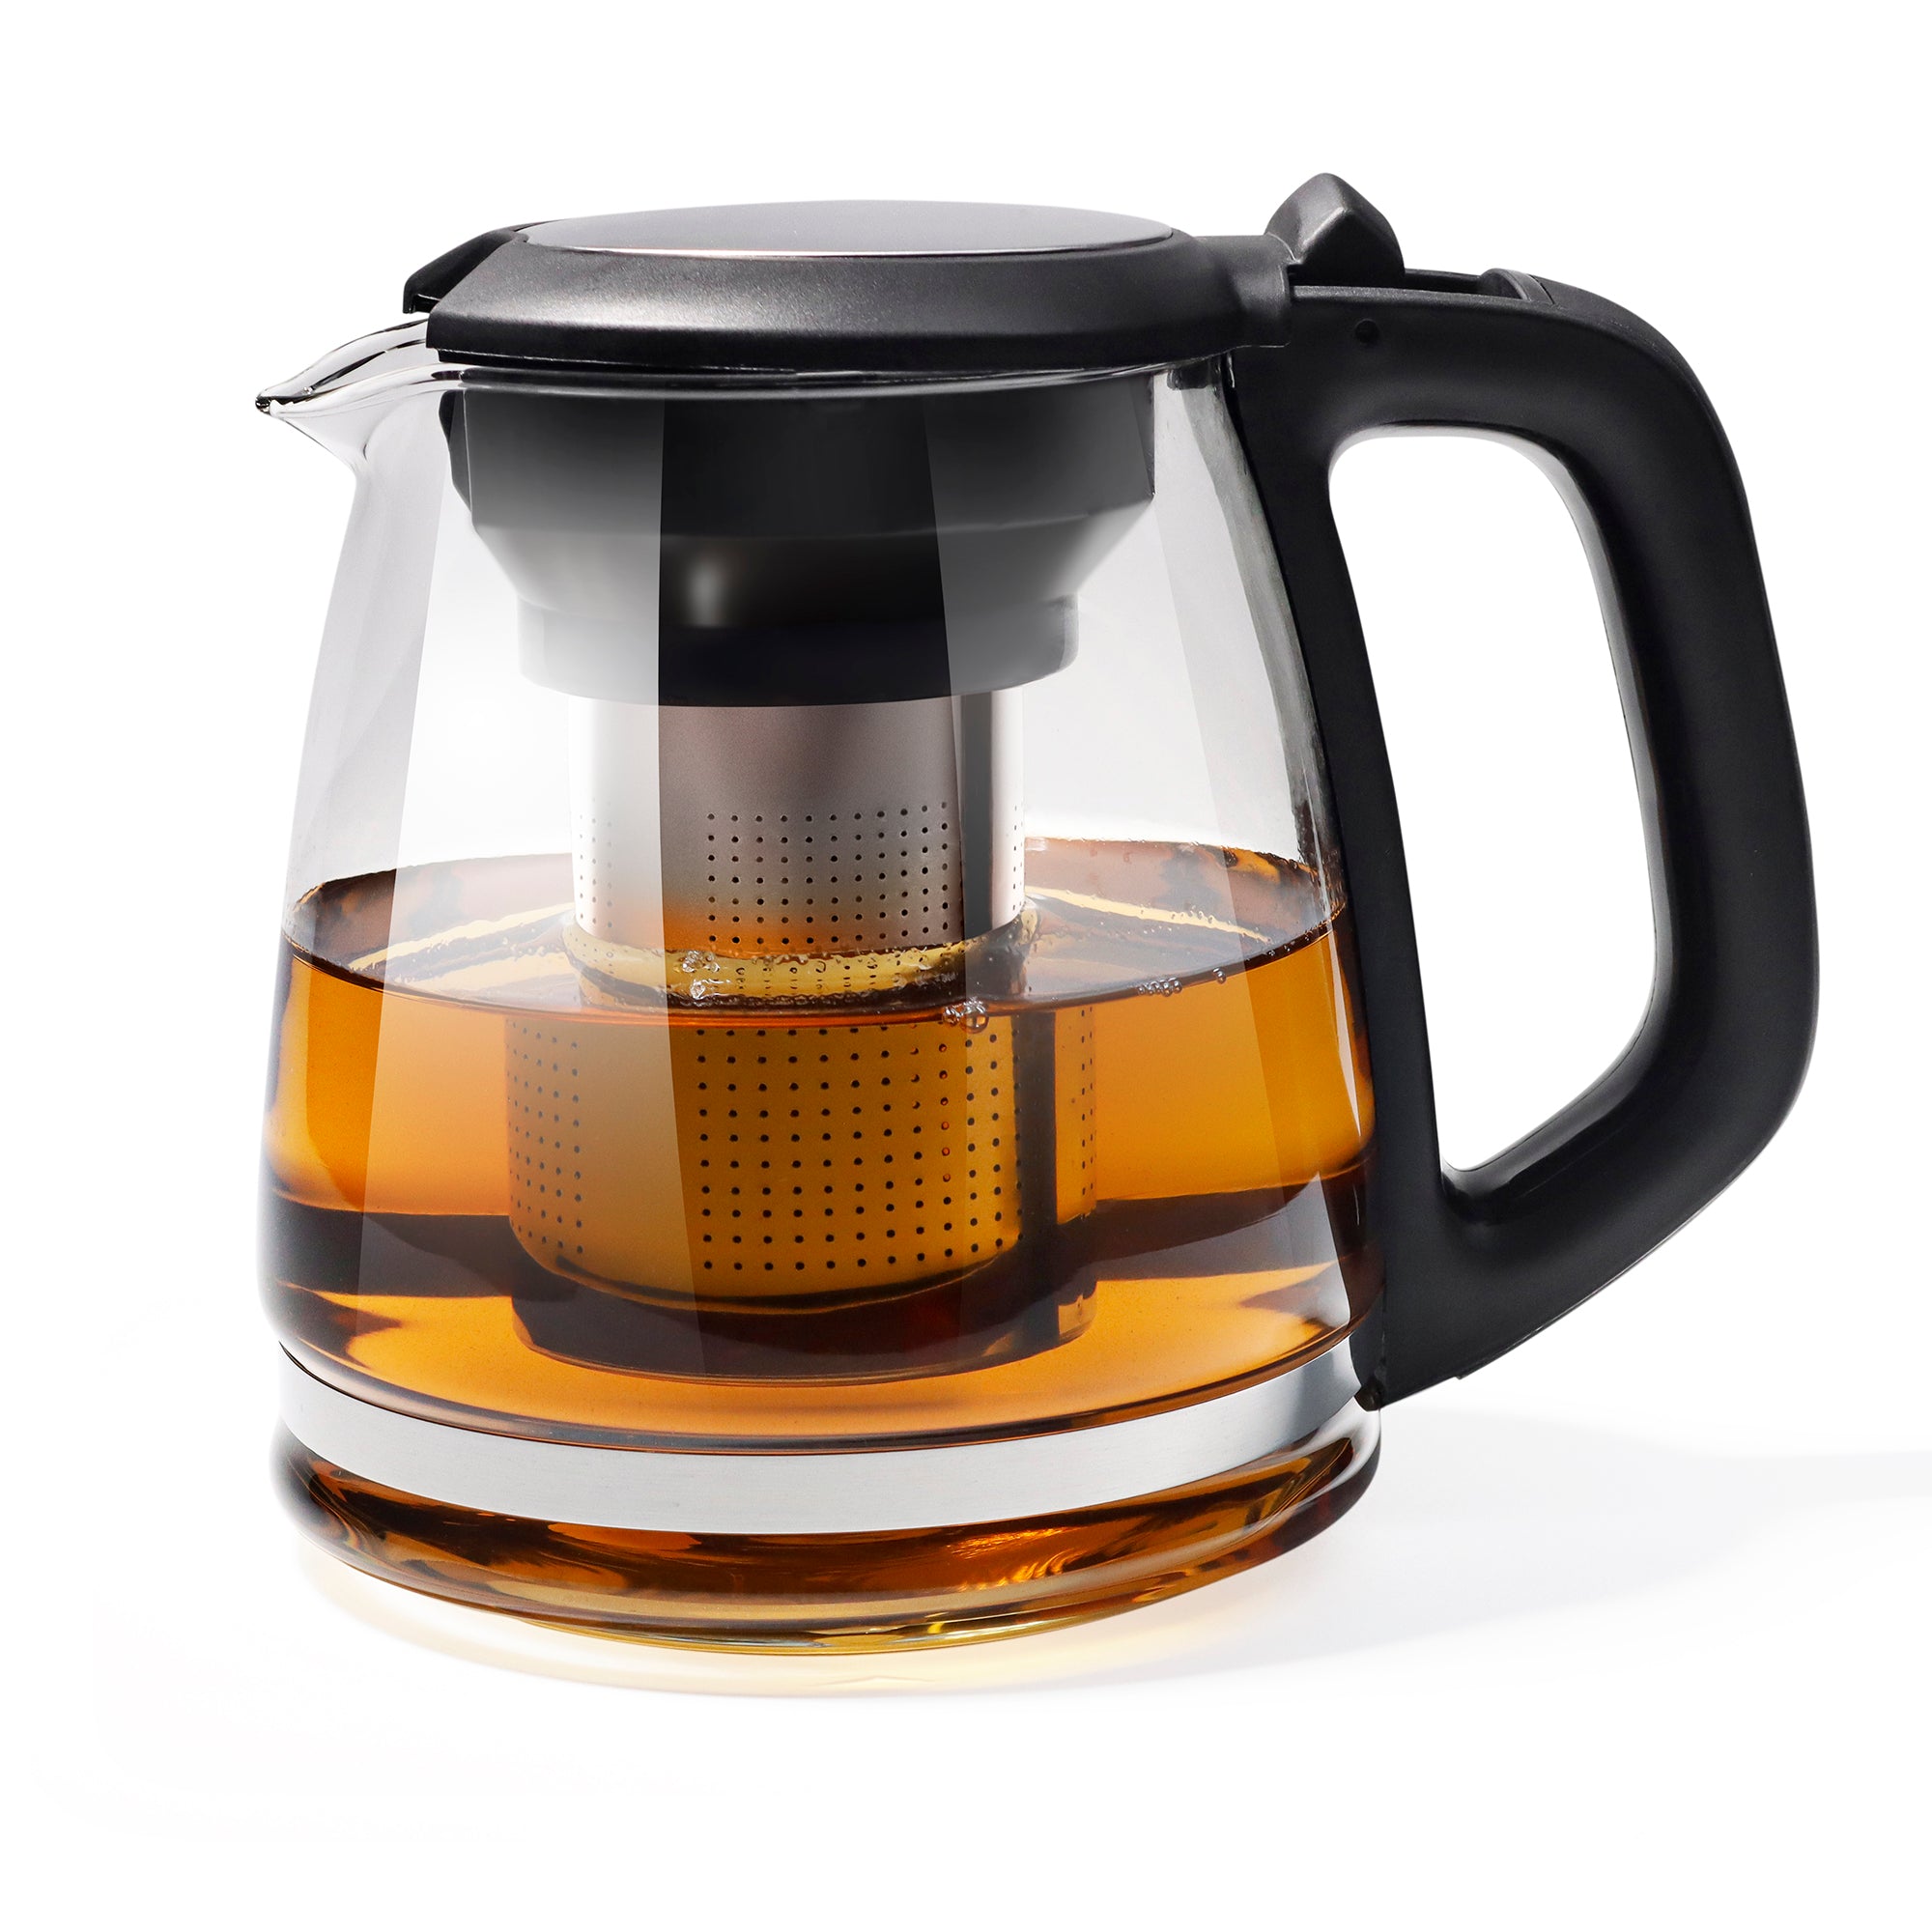 Glass Tea Pot with Infuser, Wood Handle Tea Kettle, Water for Juice  Beverage 